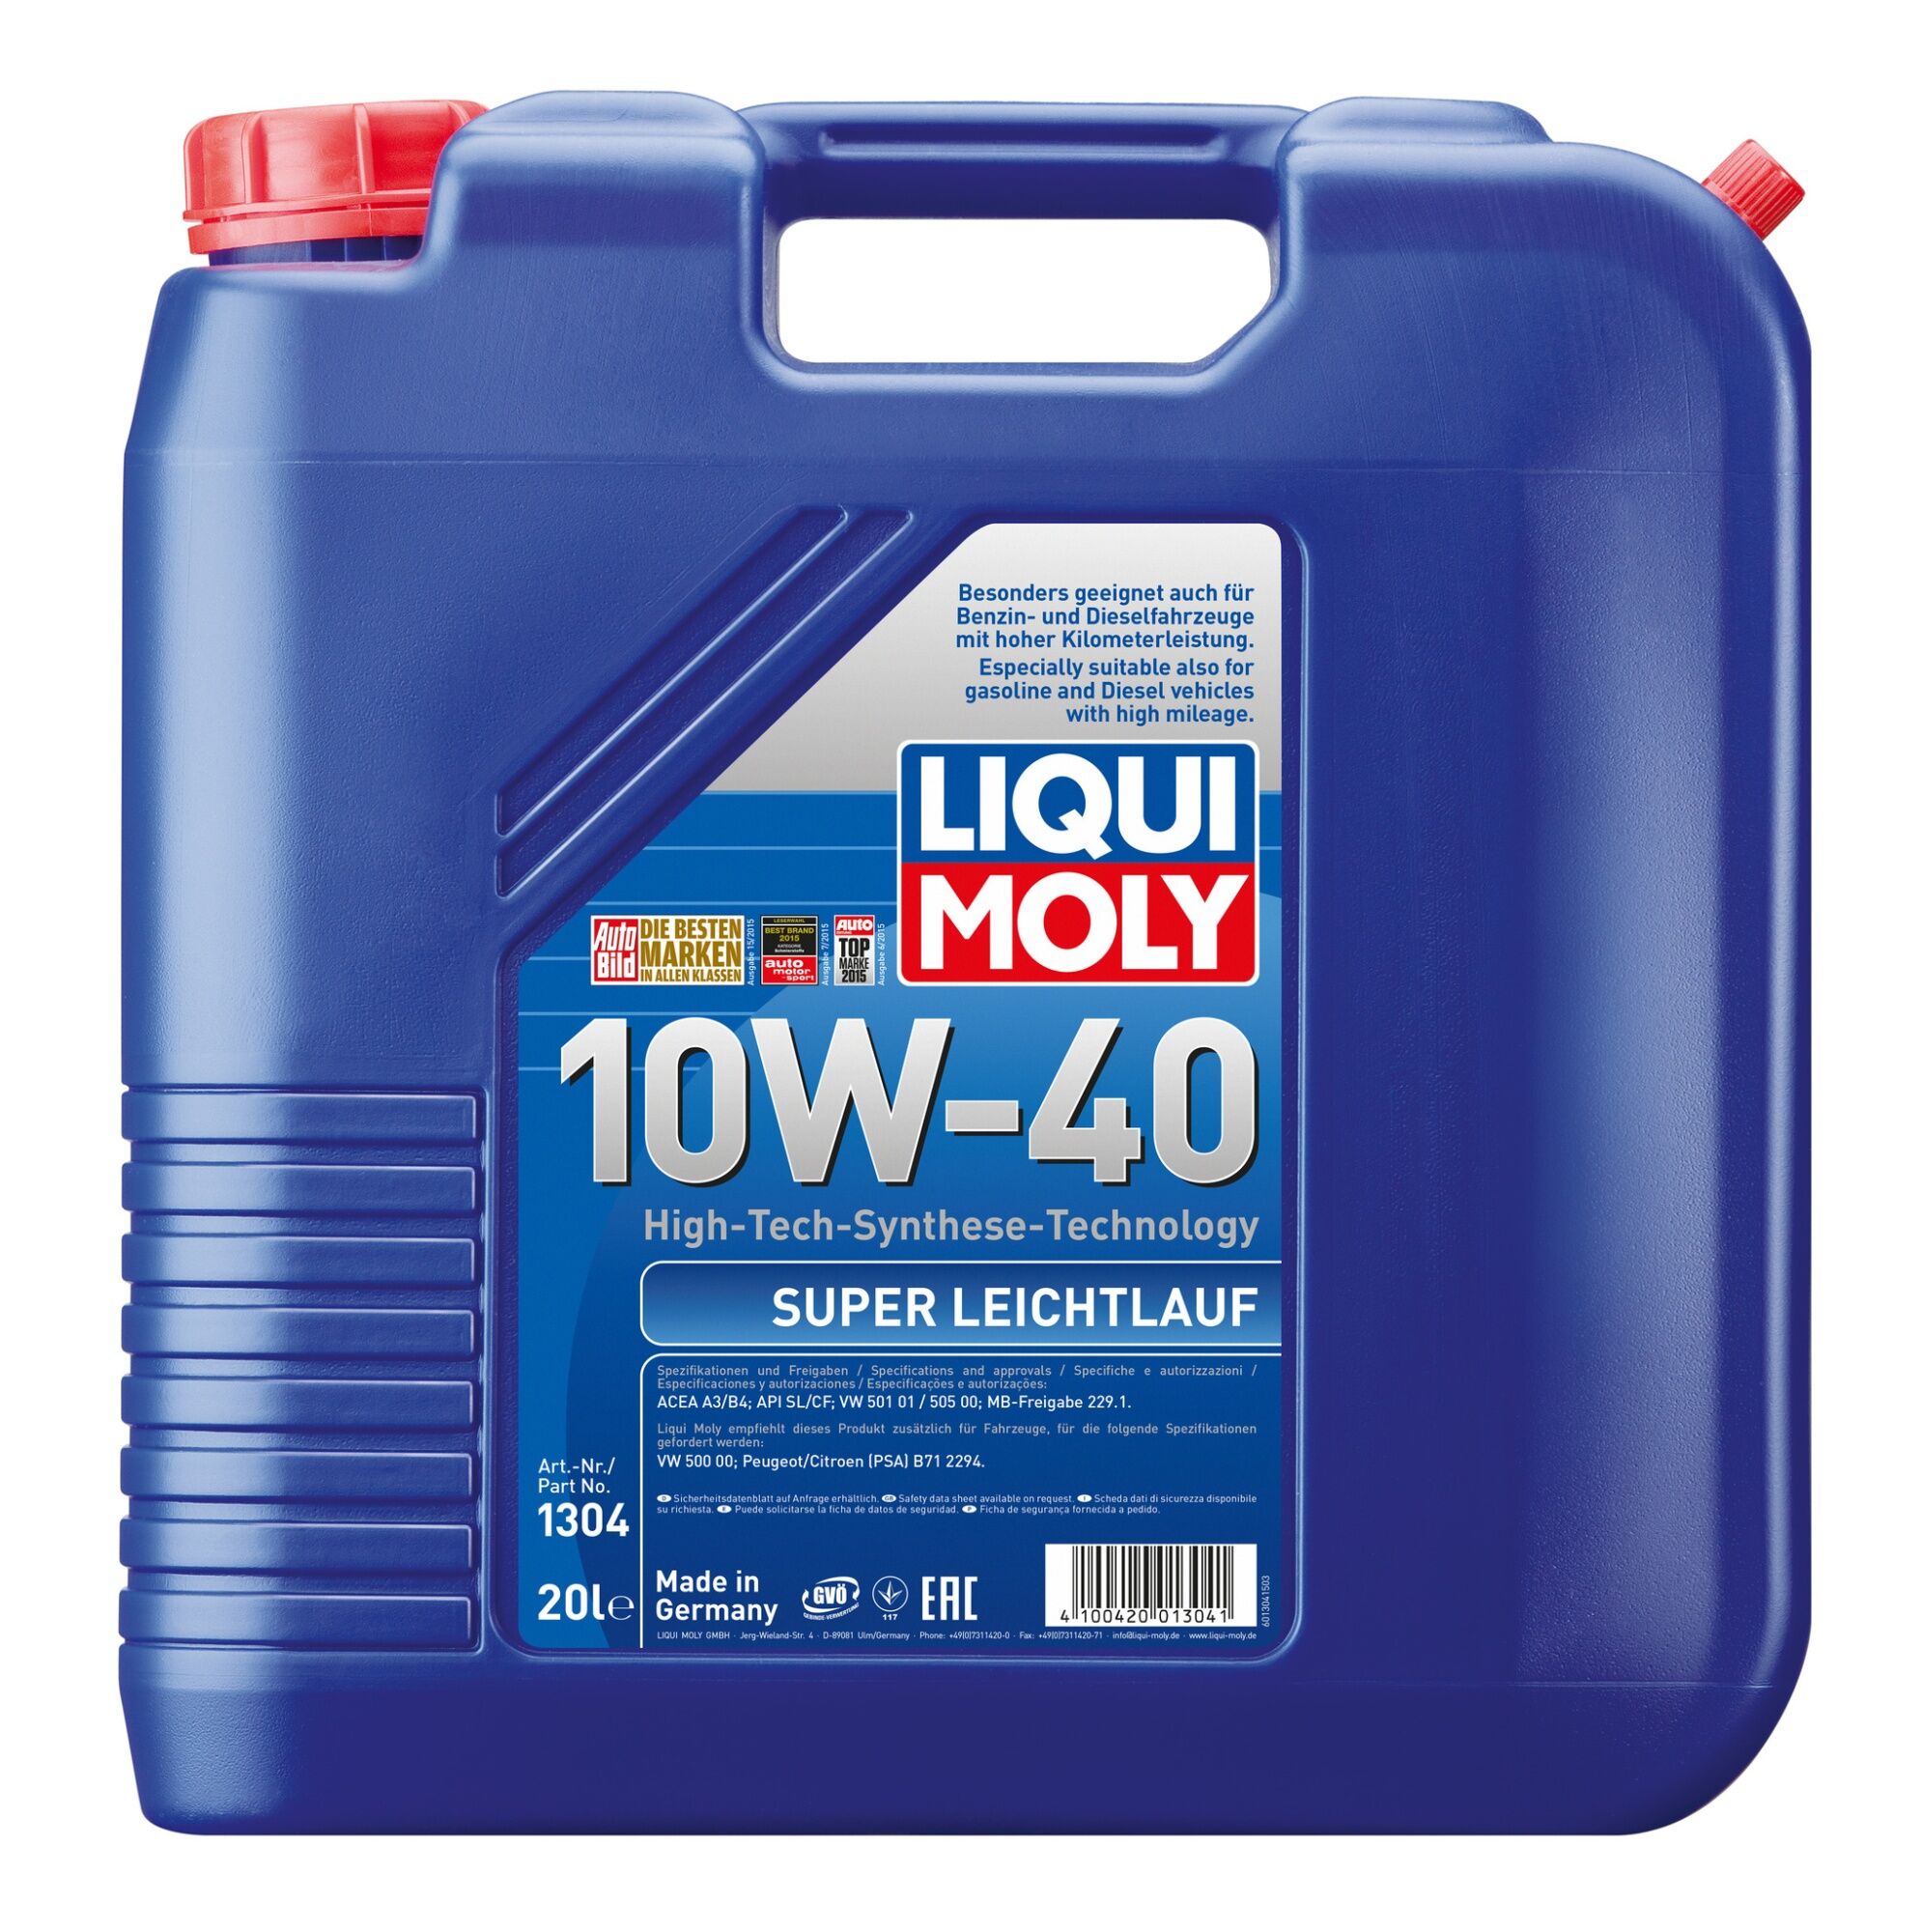 Моторное масло LIQUI MOLY Super Leichtlauf 10W-40 HC-синтетическое 20л (1304)